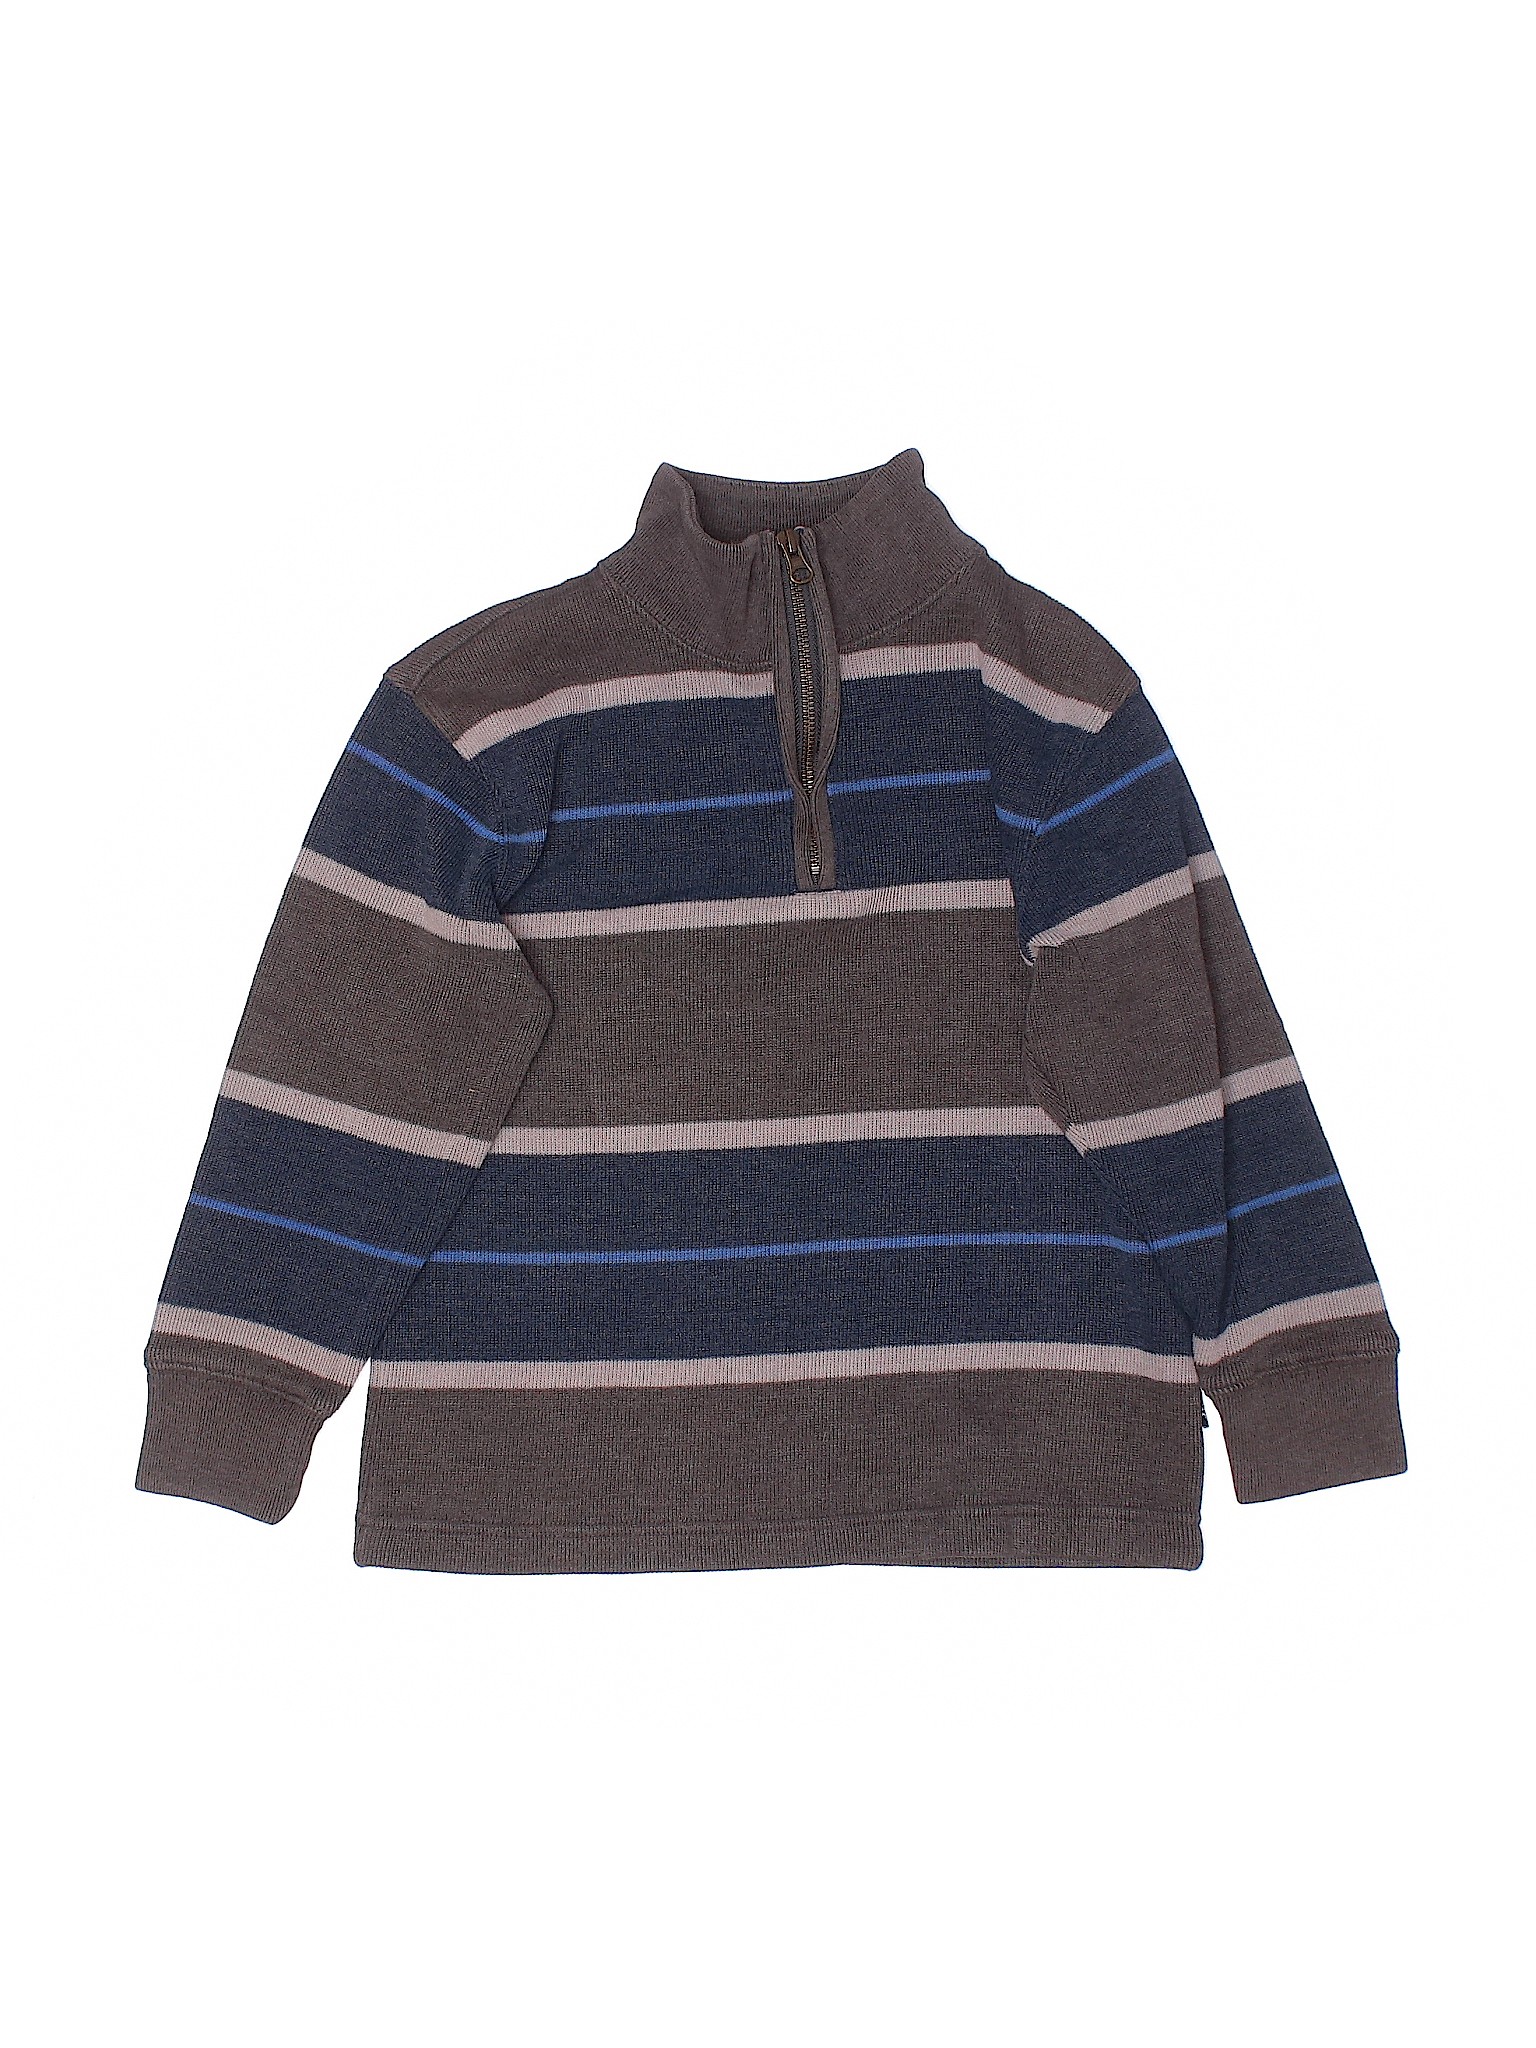 Gap Kids Boys Gray Pullover Sweater 6 | eBay